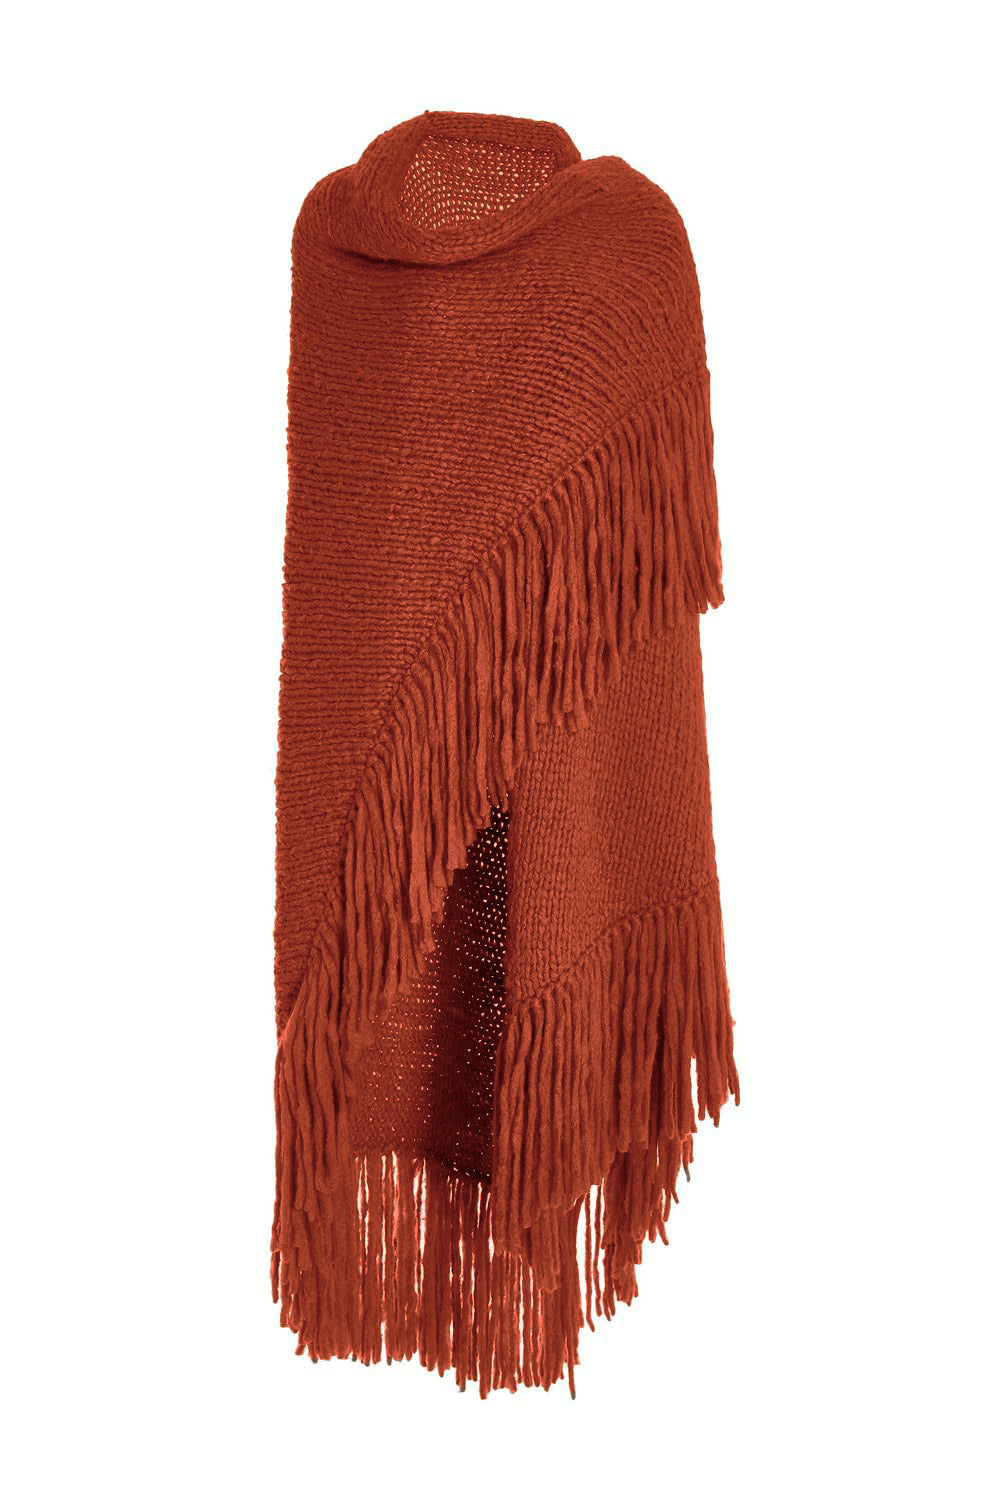 Lauren Knit Wrap in Copper Welfat Cashmere